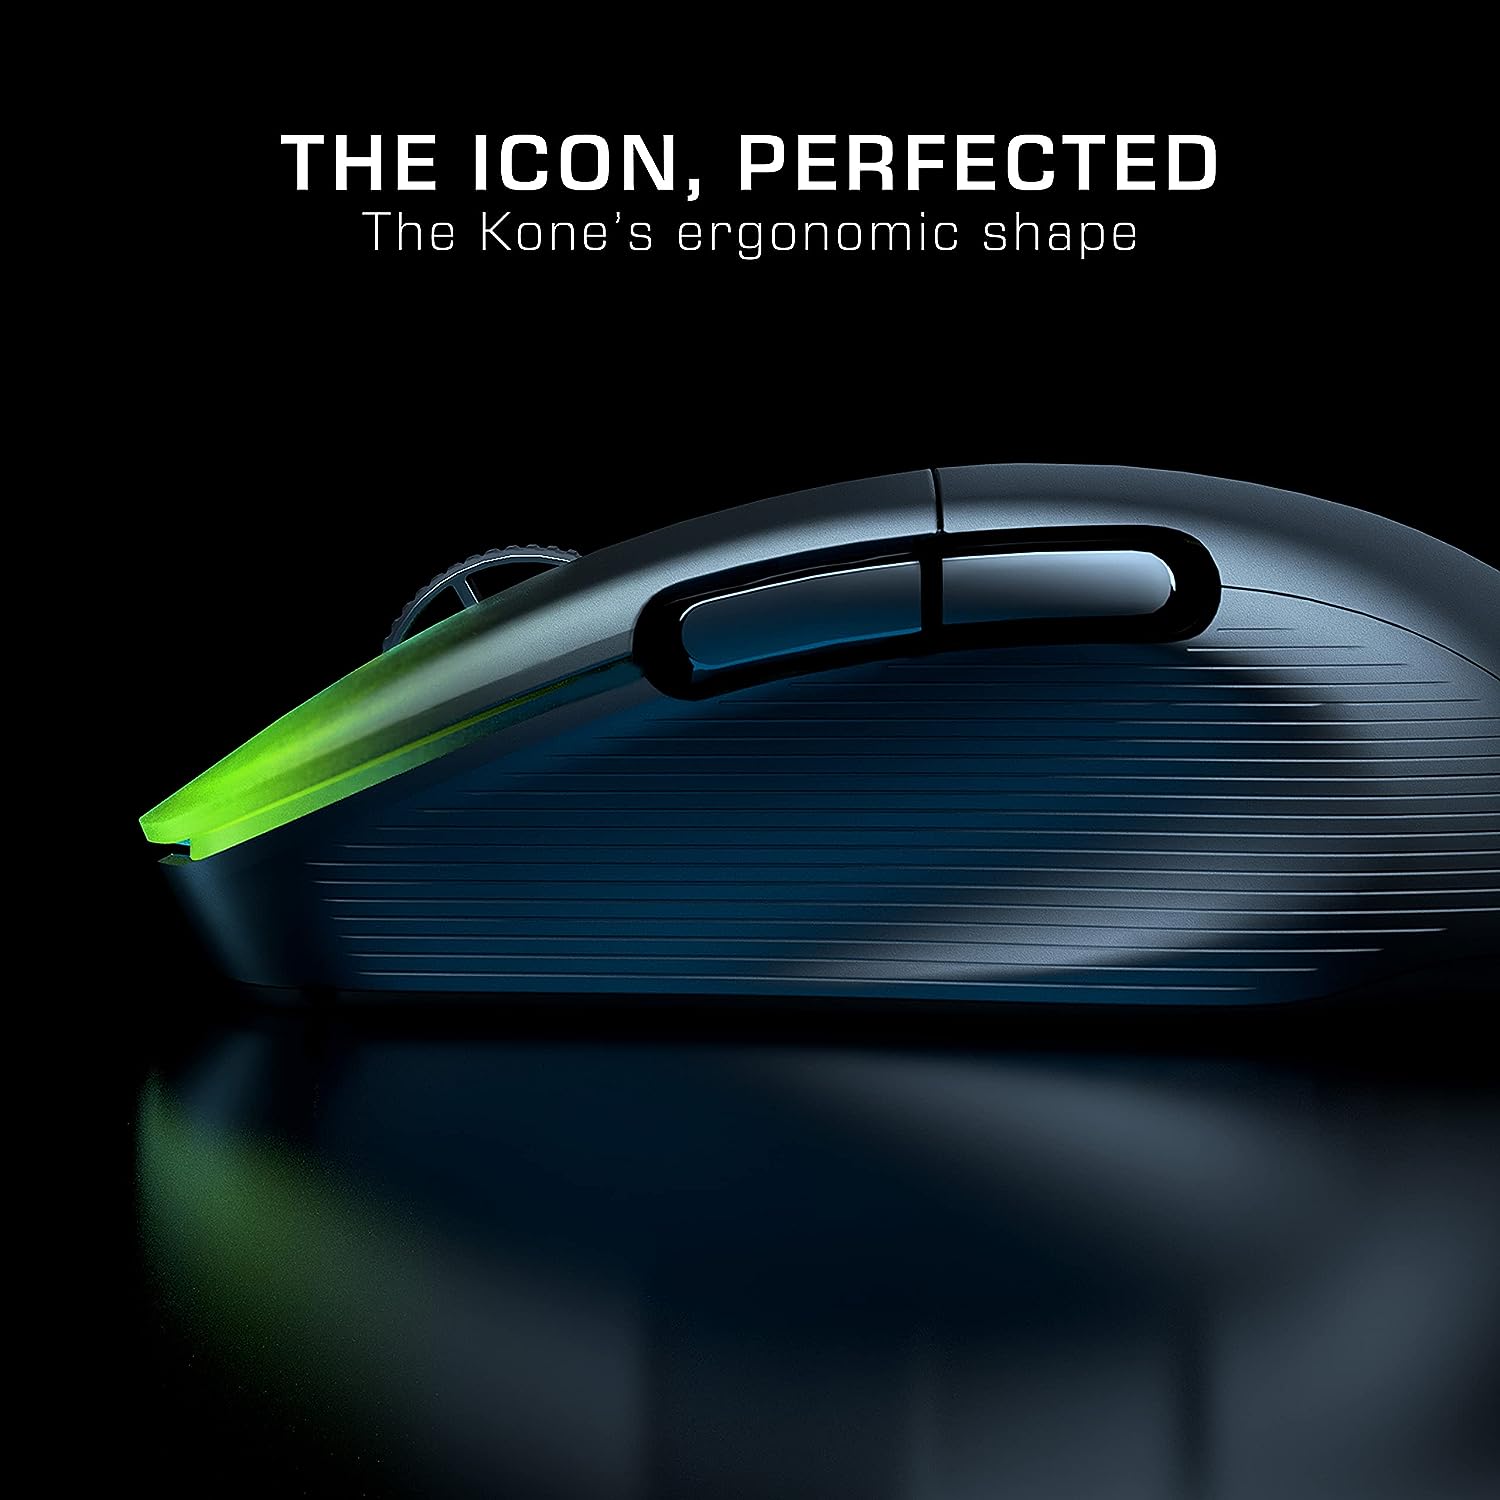 ROCCAT Kone Pro Air Gaming PC Wireless Mouse Black - Geek Tech